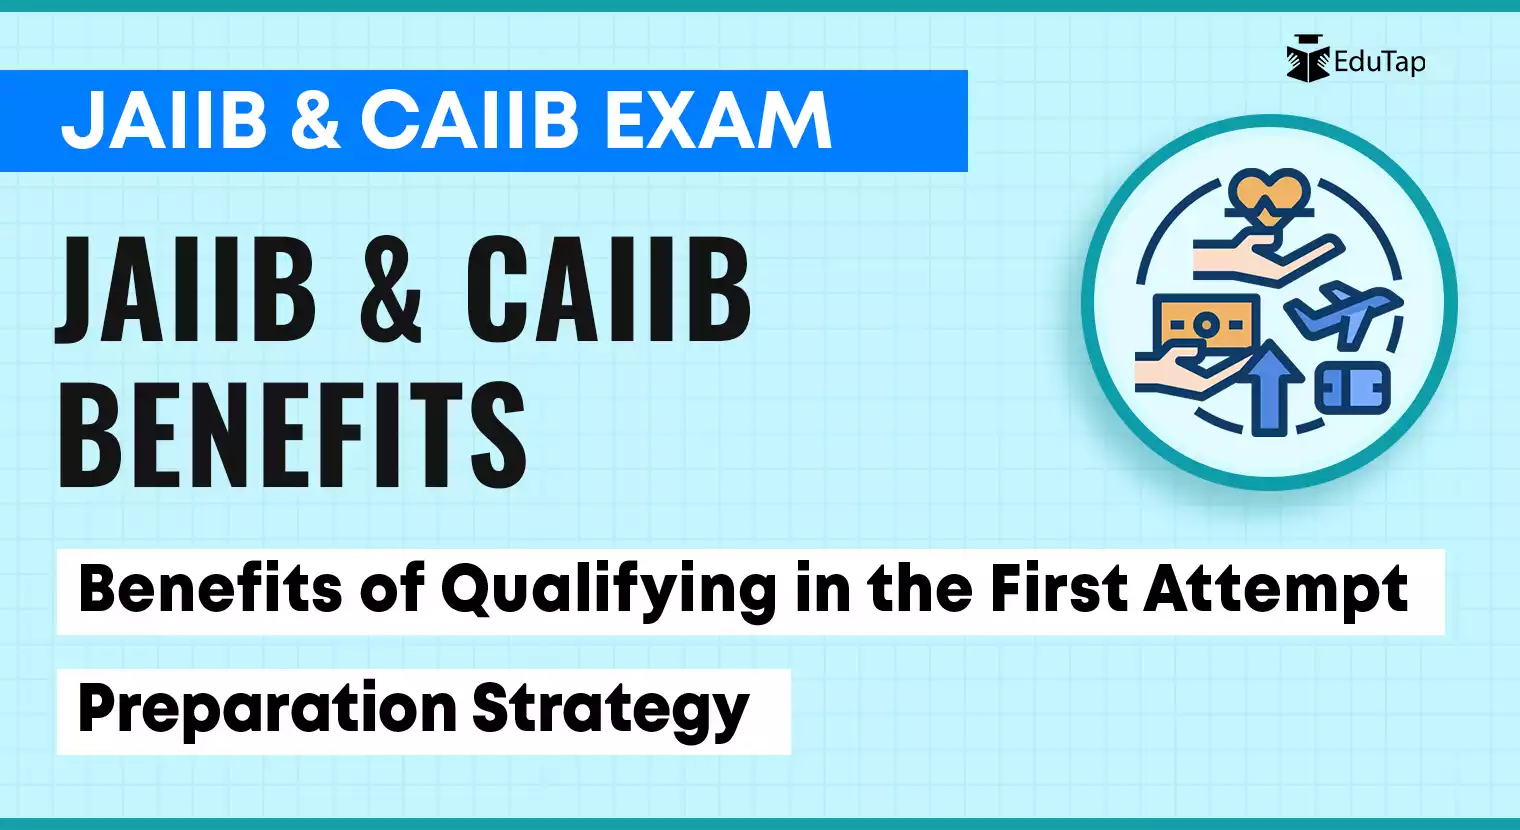 13 Benefits of Qualifying the JAIIB and CAIIB Exams